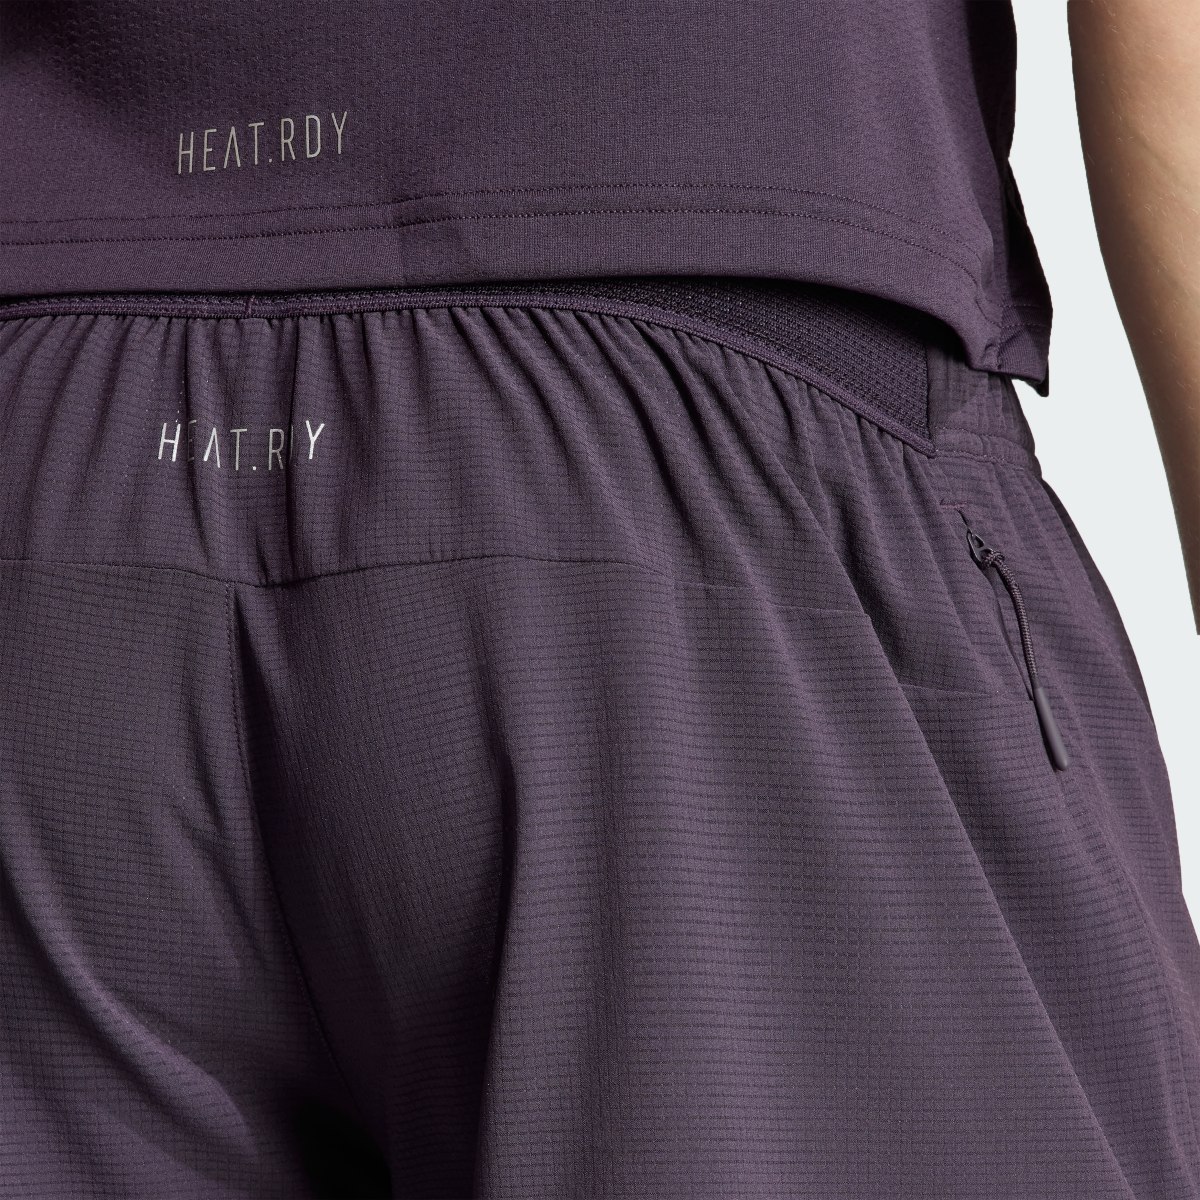 Adidas Pantalón corto Designed for Training HIIT Workout HEAT.RDY. 6